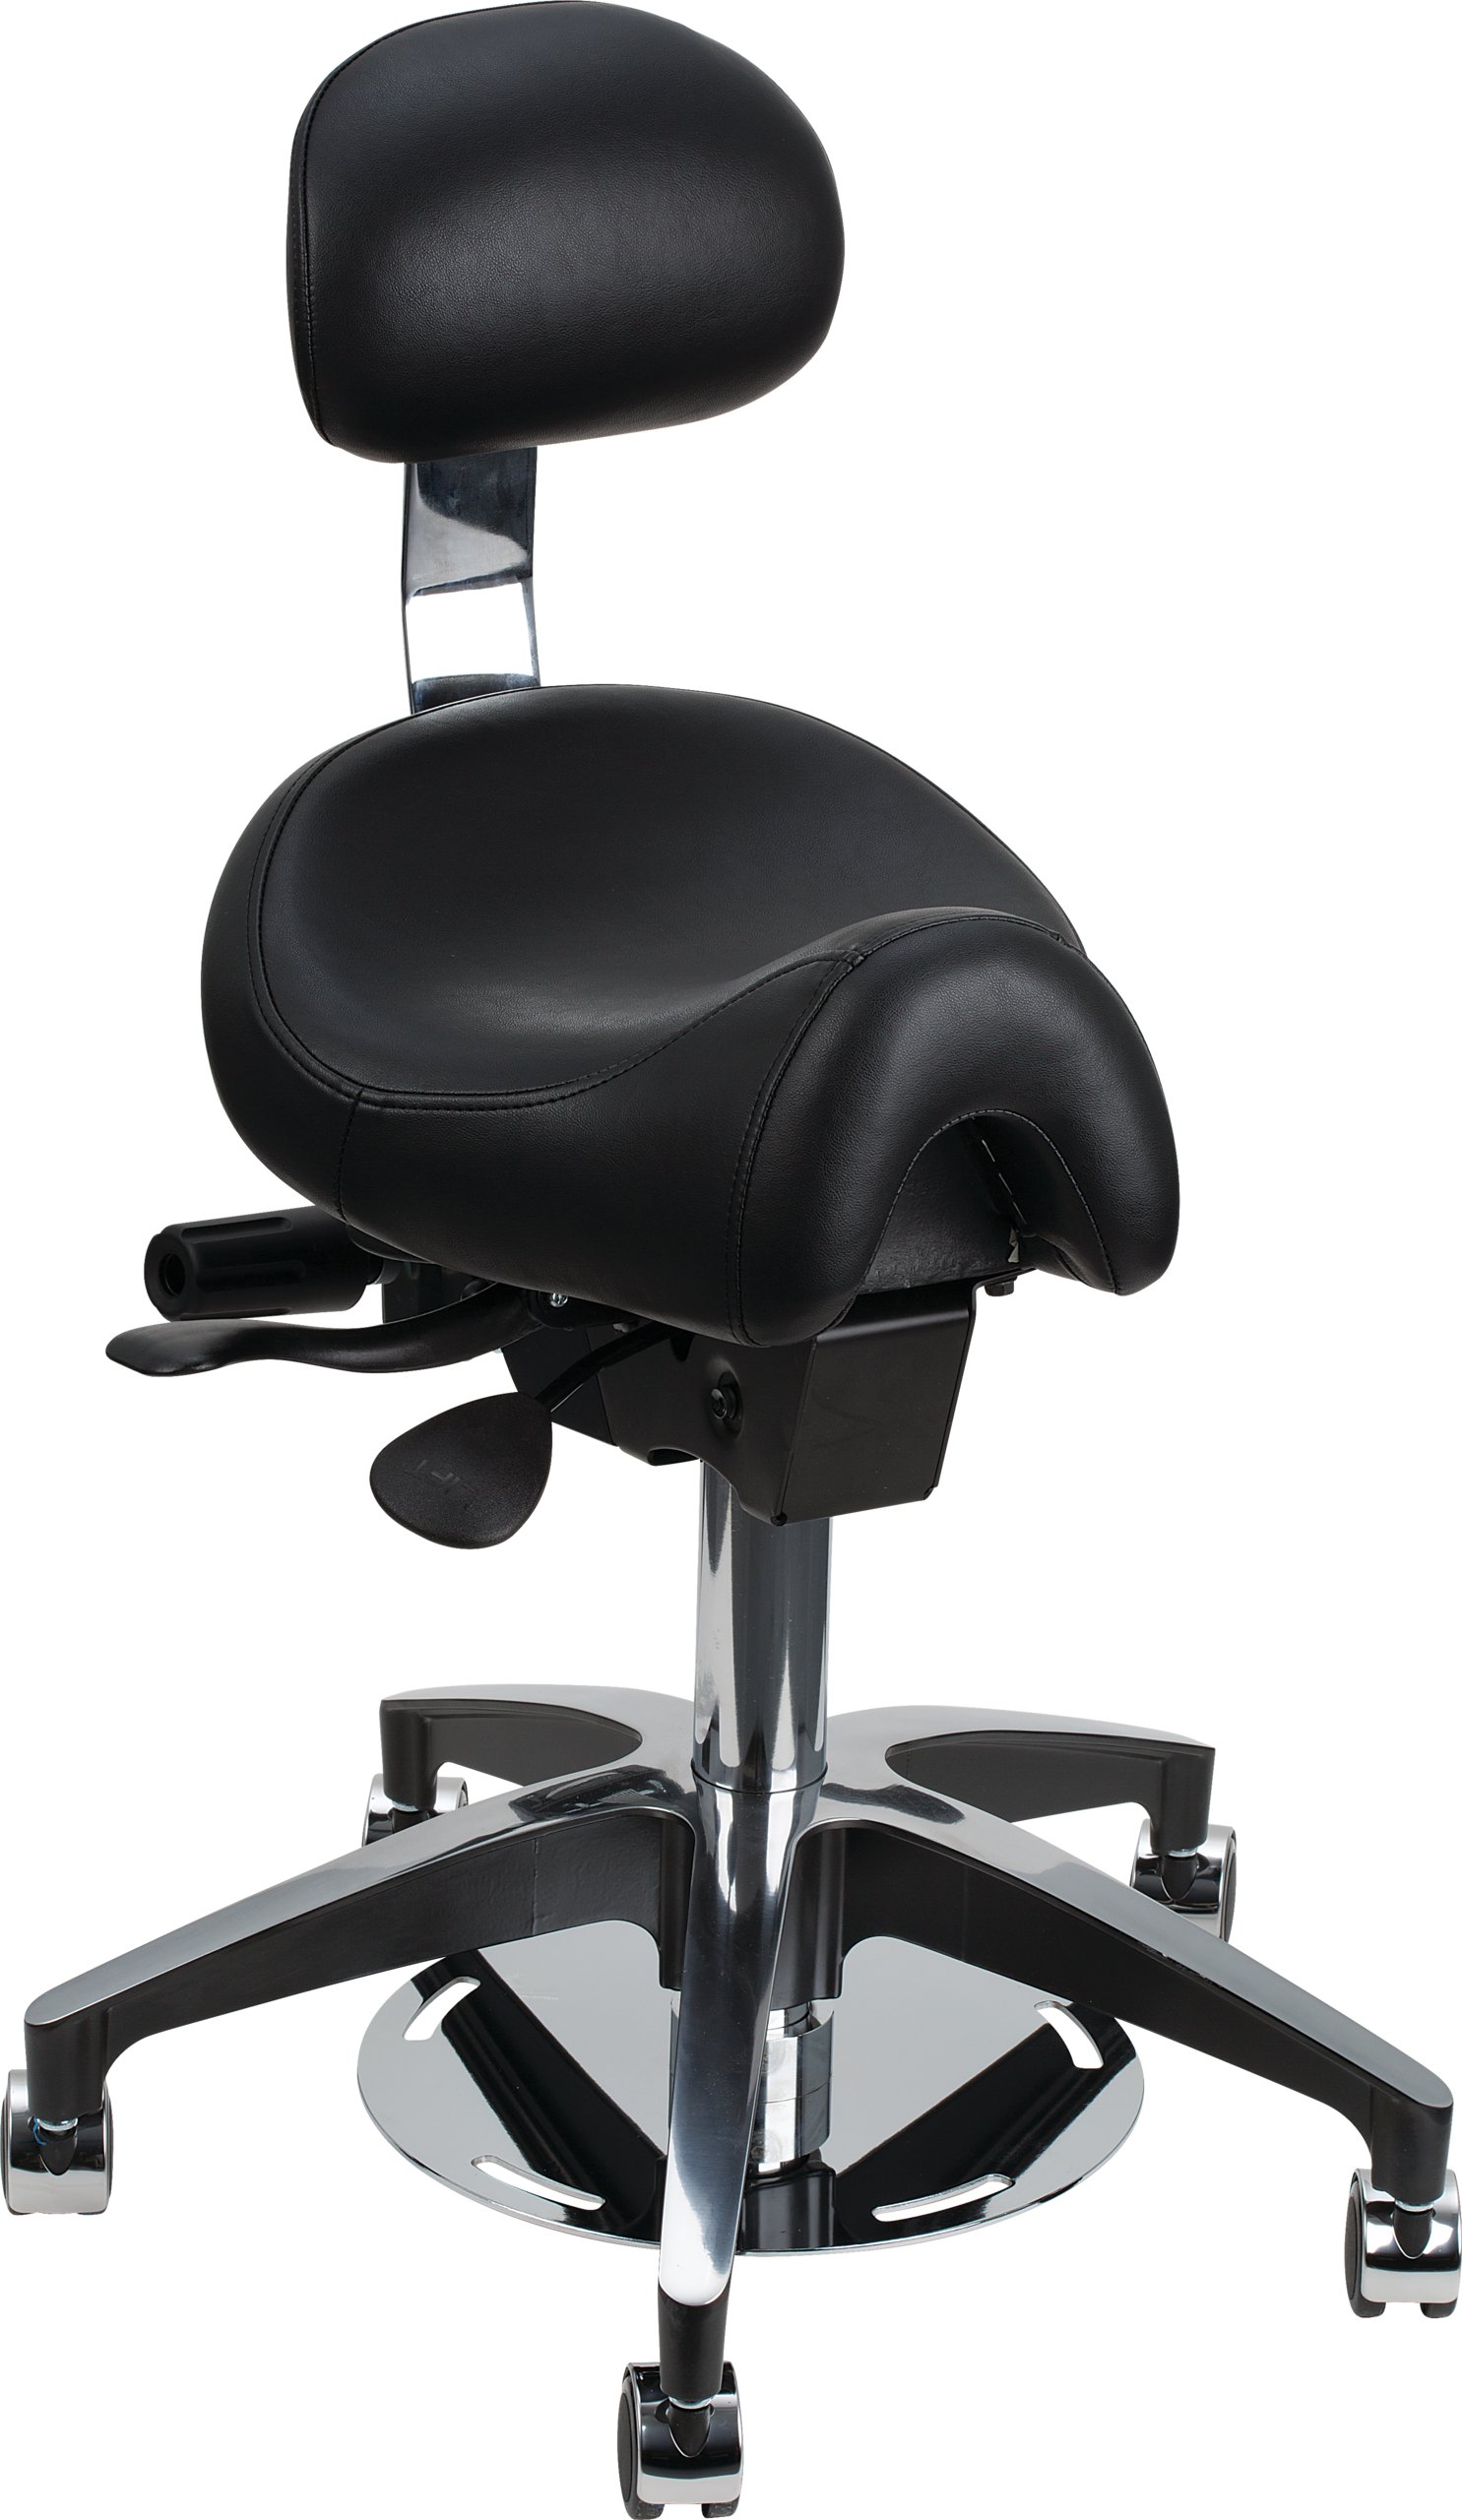 Ergonomic Saddle Seat Chair